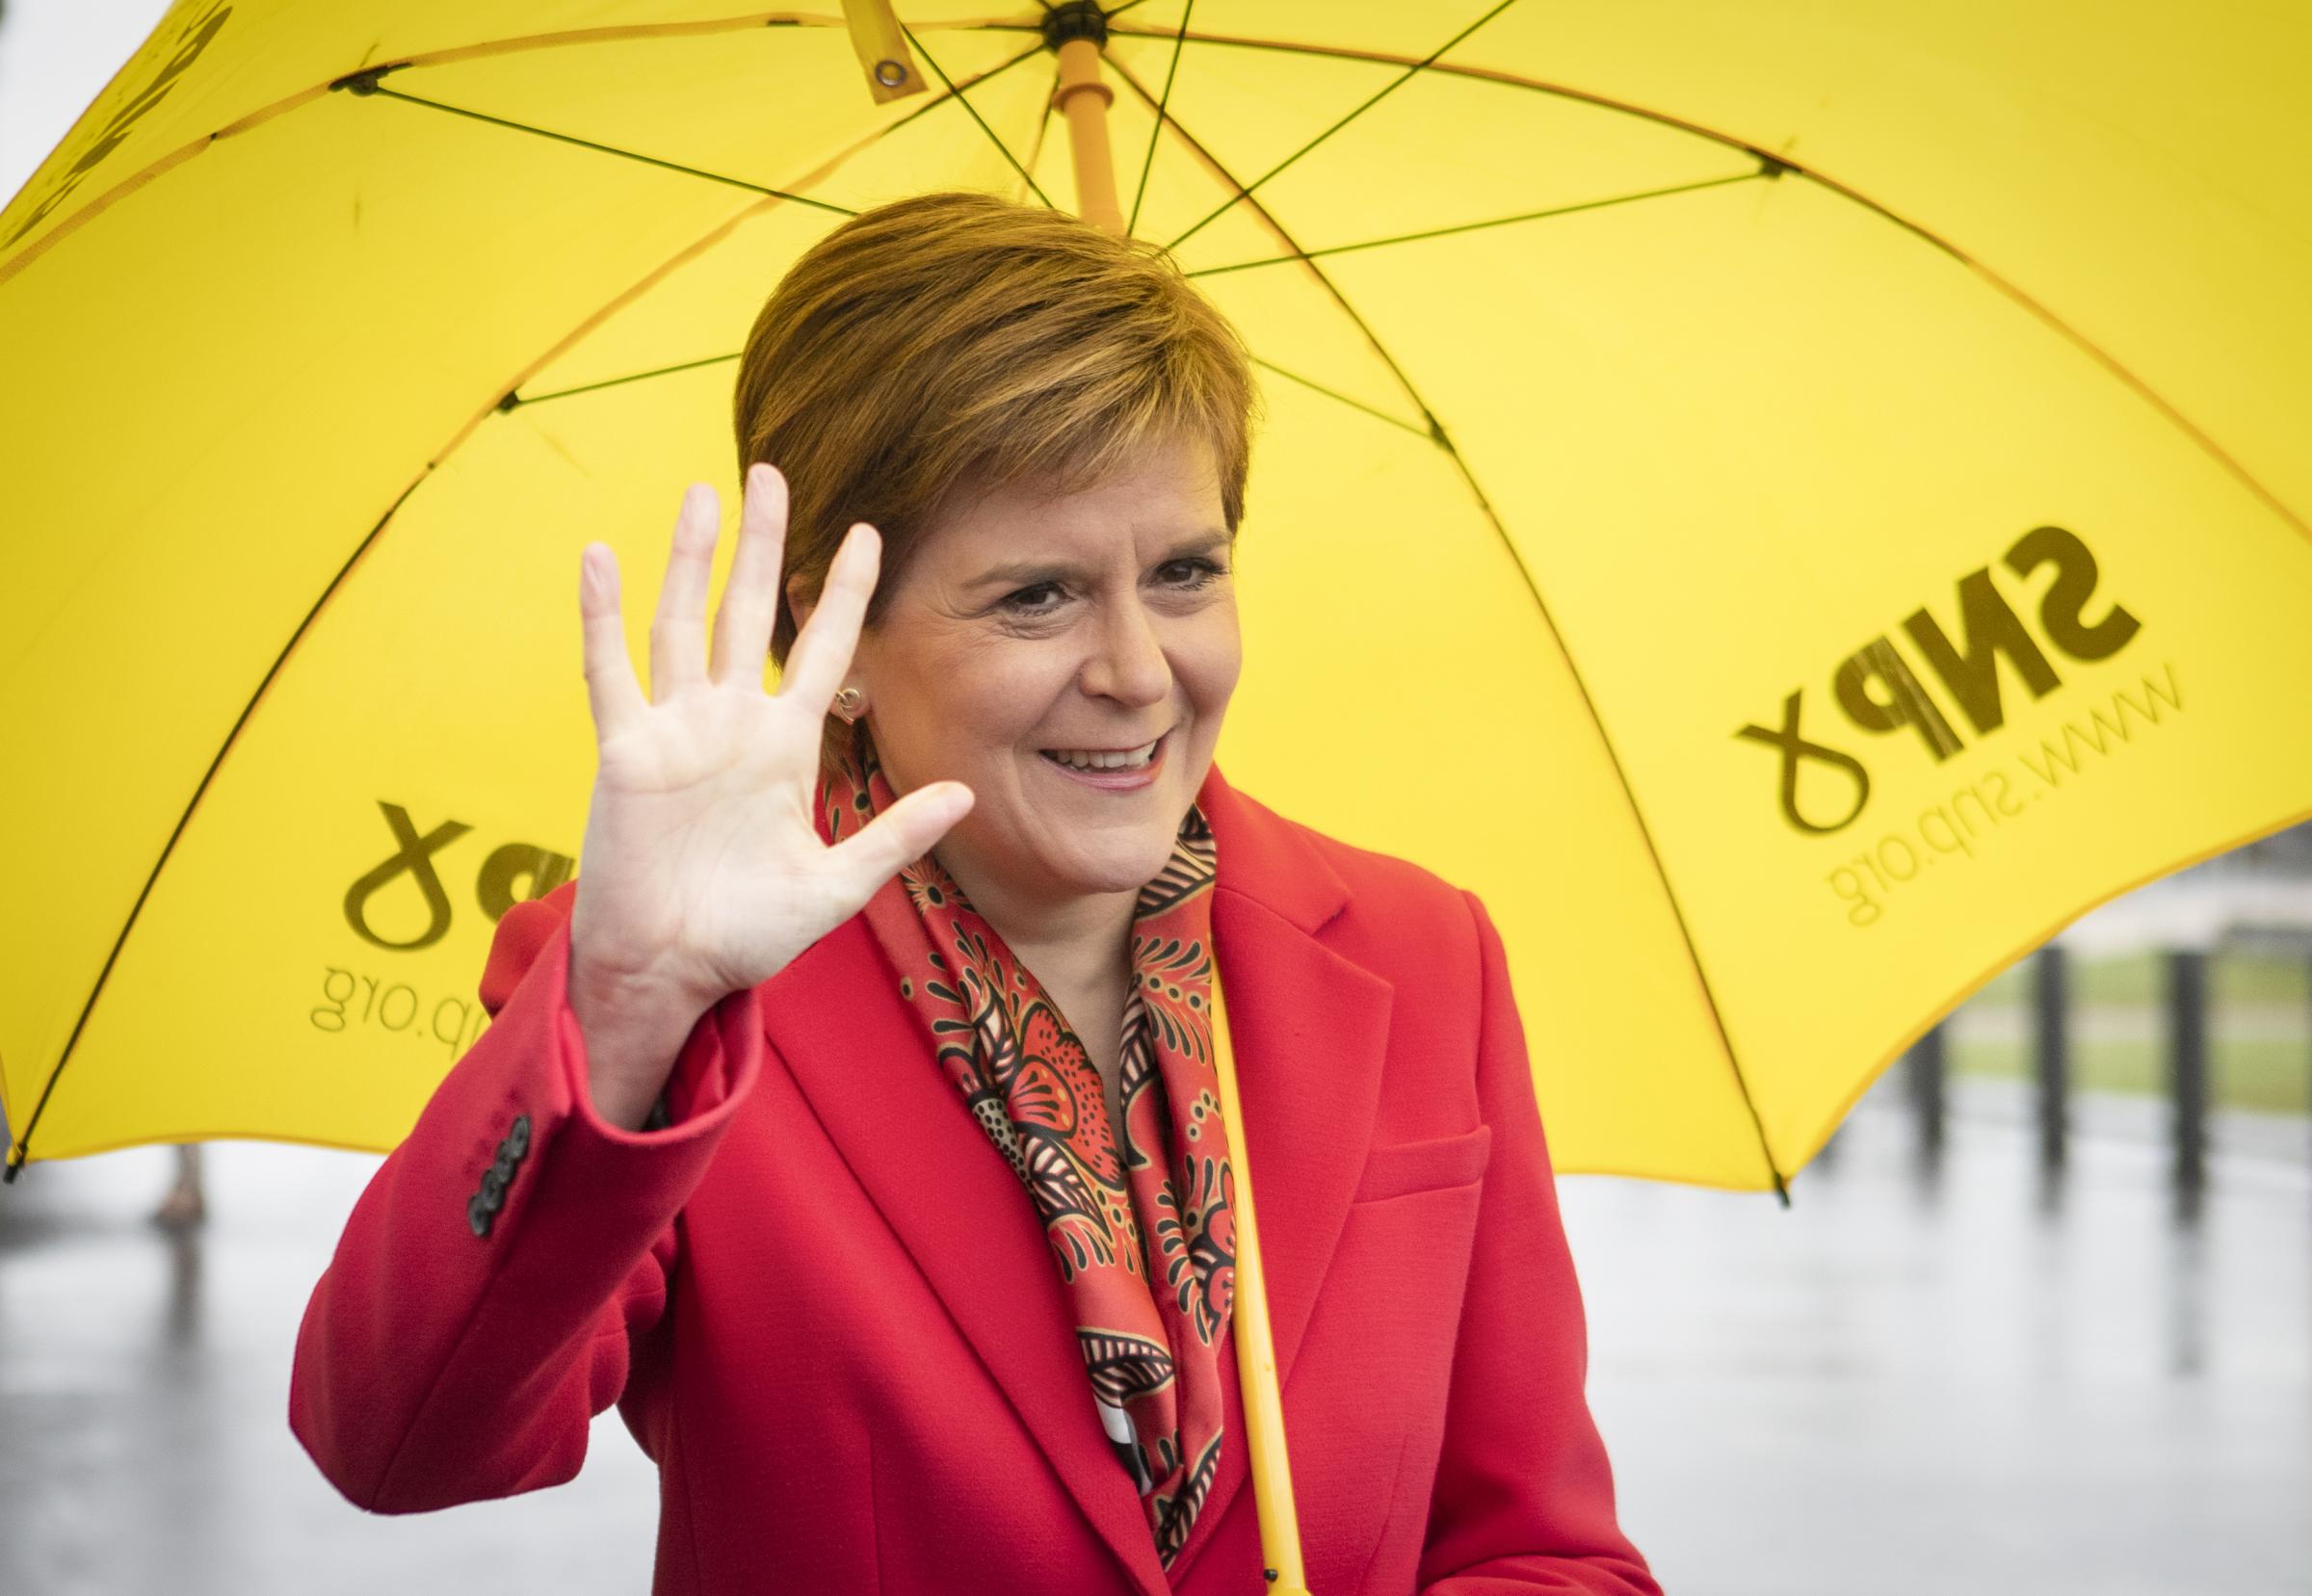 IN FULL: Nicola Sturgeon's speech on SNP's 'historic election achievement'